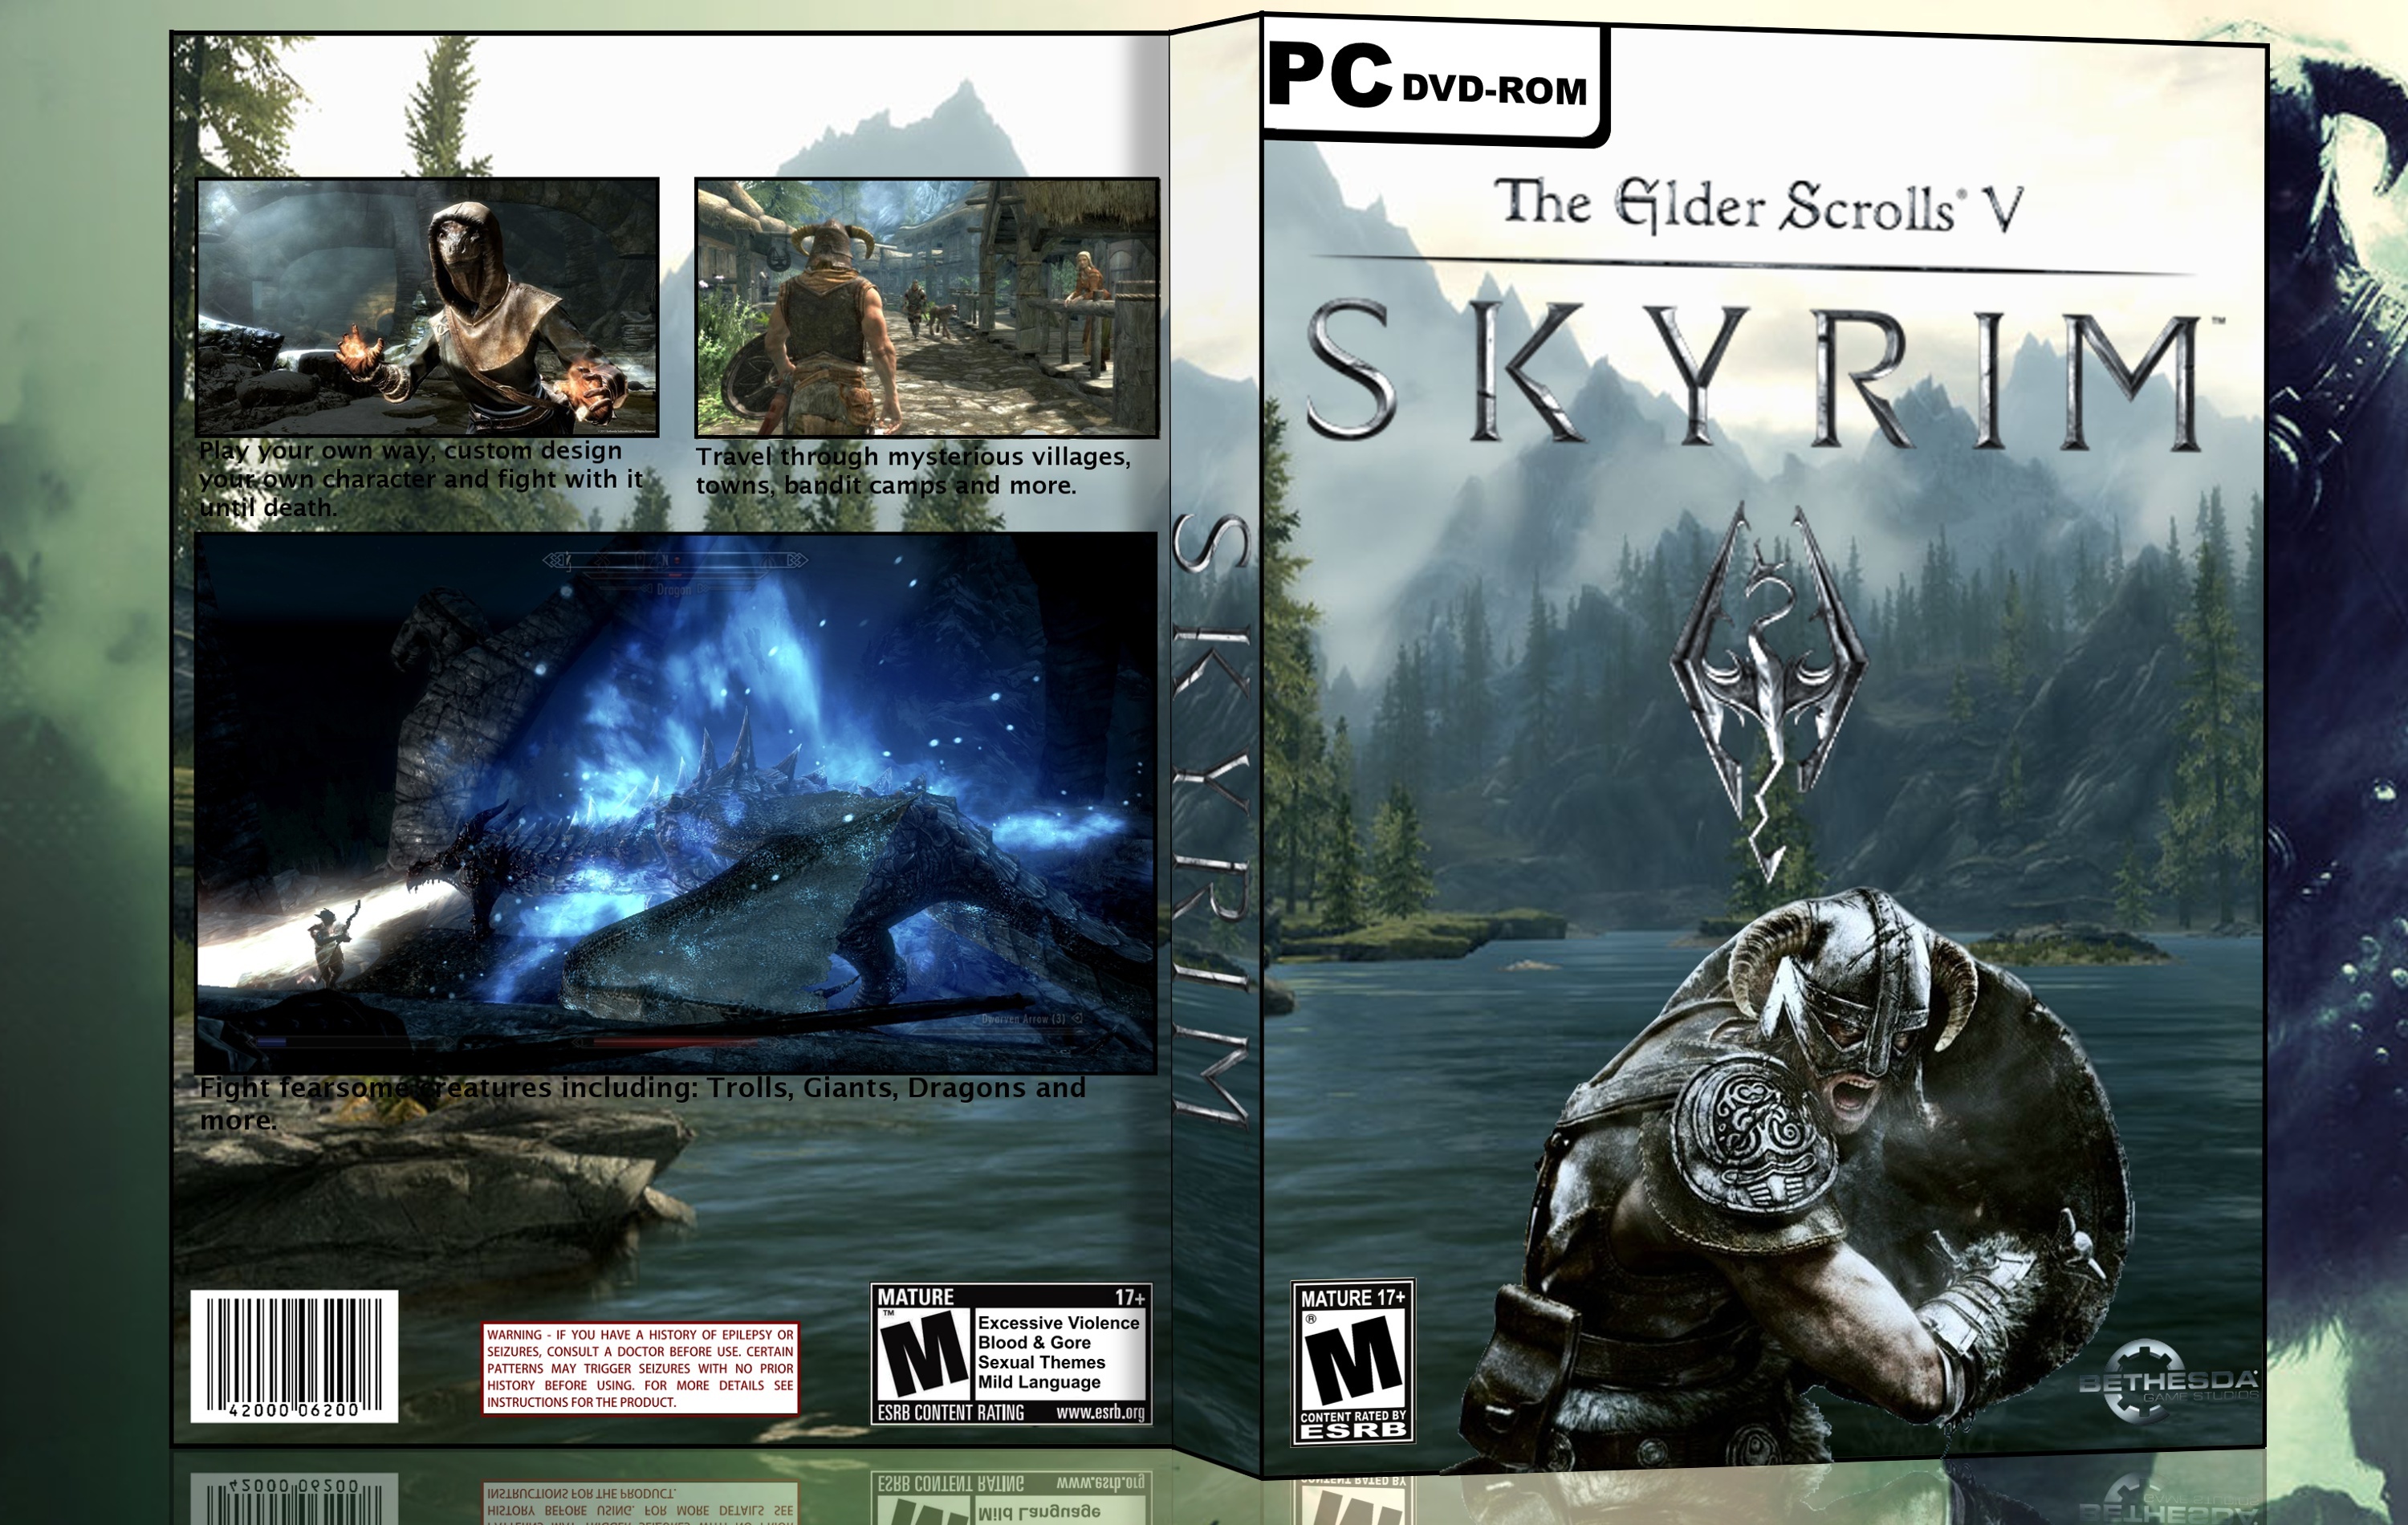 The Elder Scrolls V: Skyrim box cover